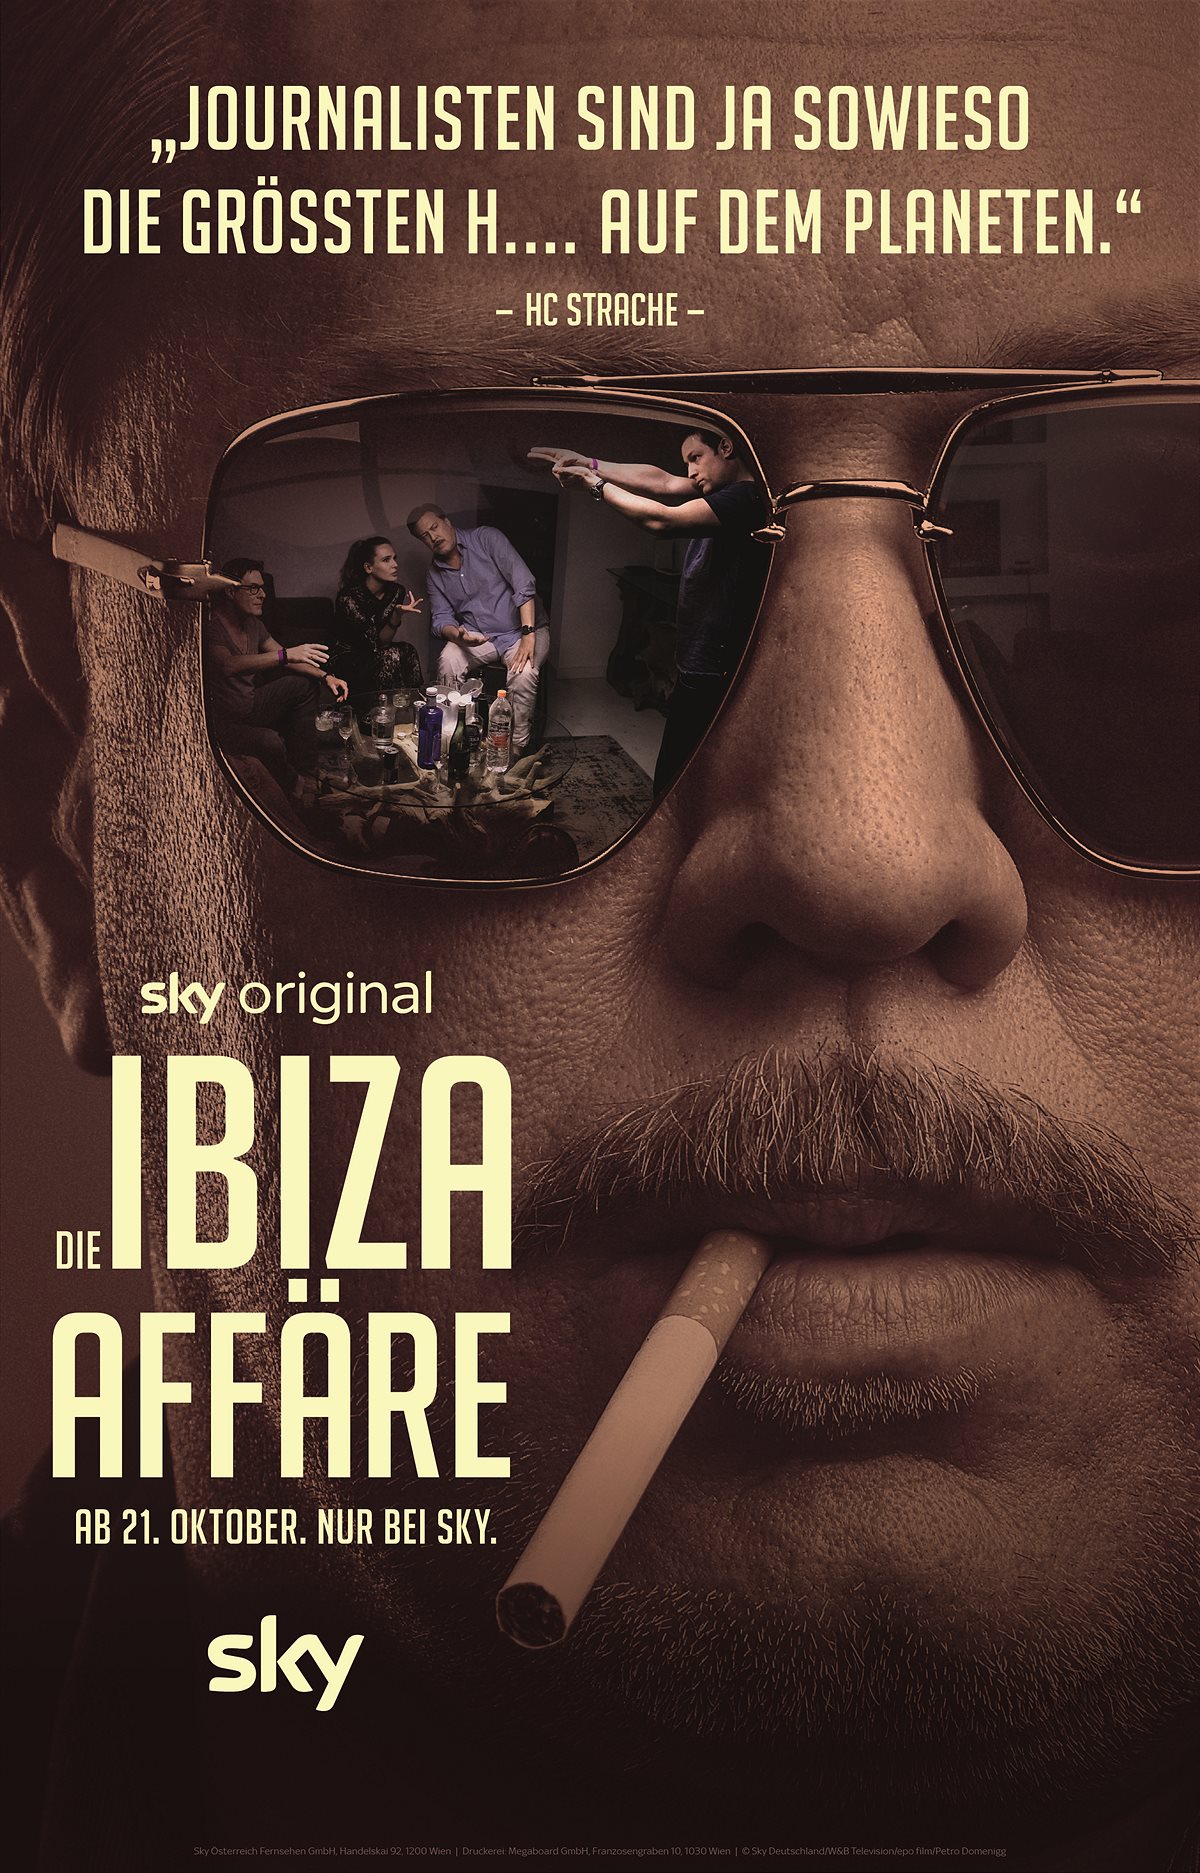 Sky Kampagne Die Ibiza Affäre